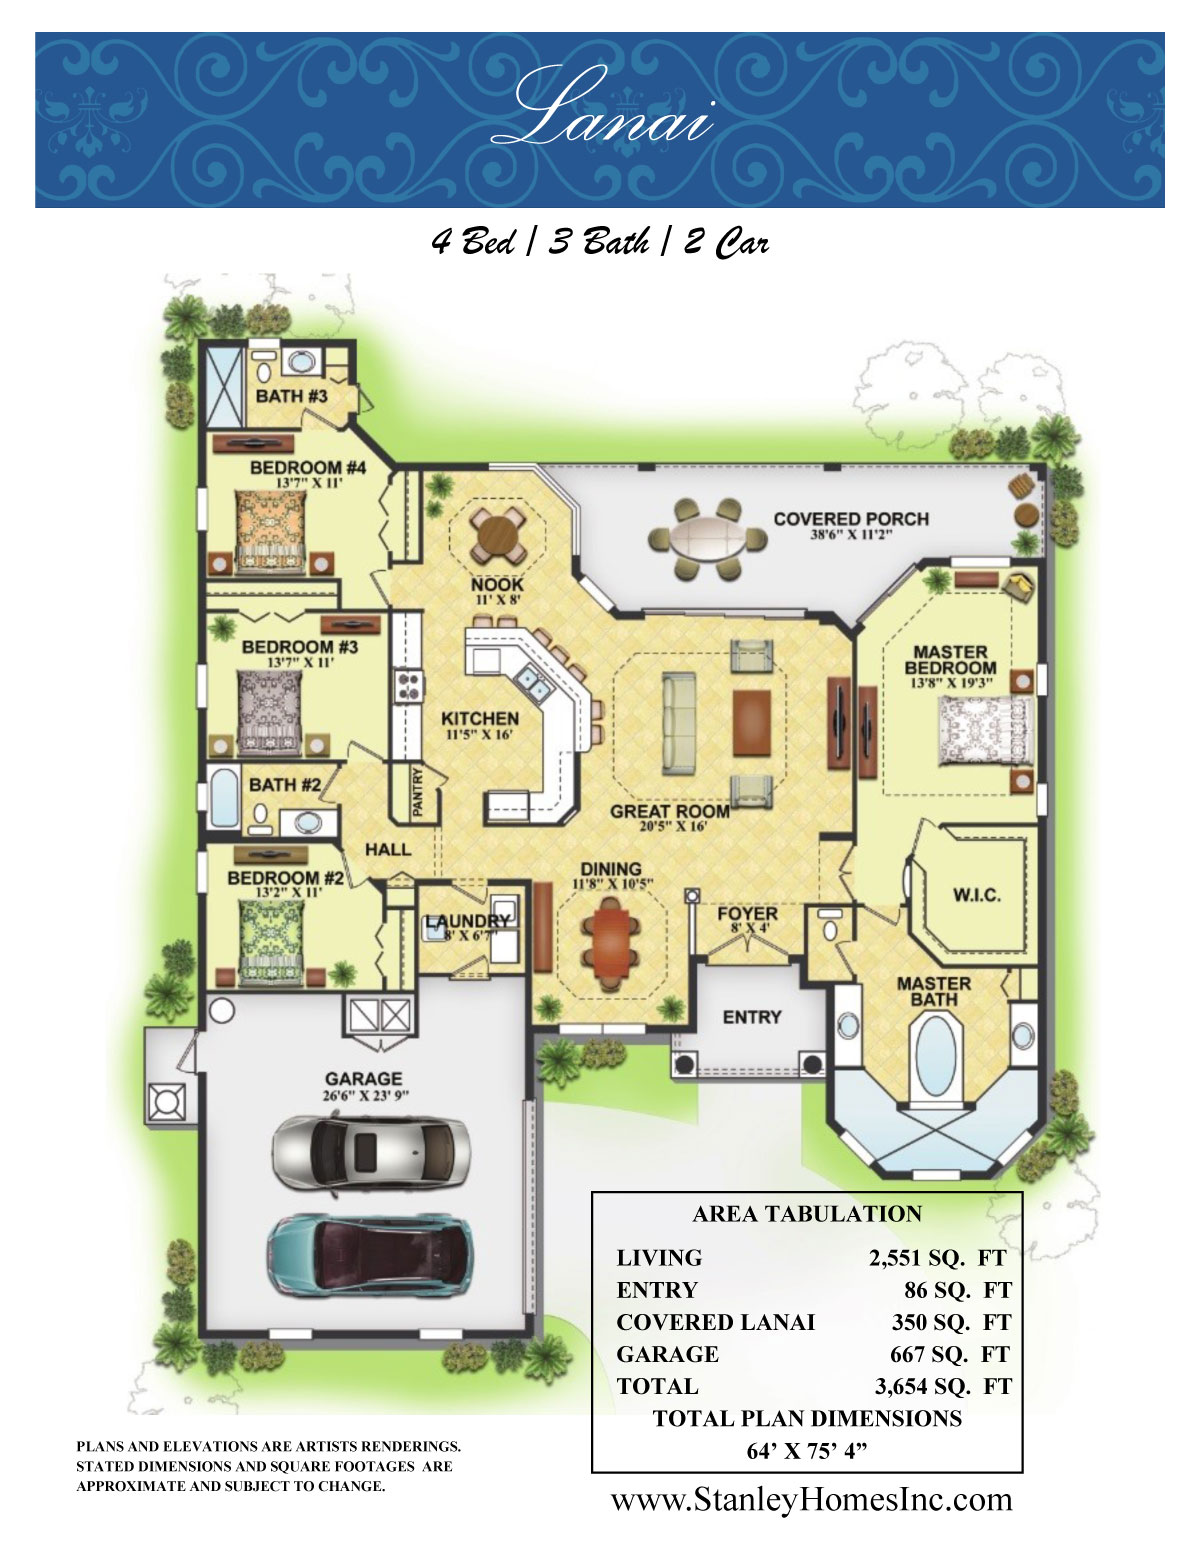 Lanai Floor Plan custom homes Melbourne Florida Stanley Homes Brevard county